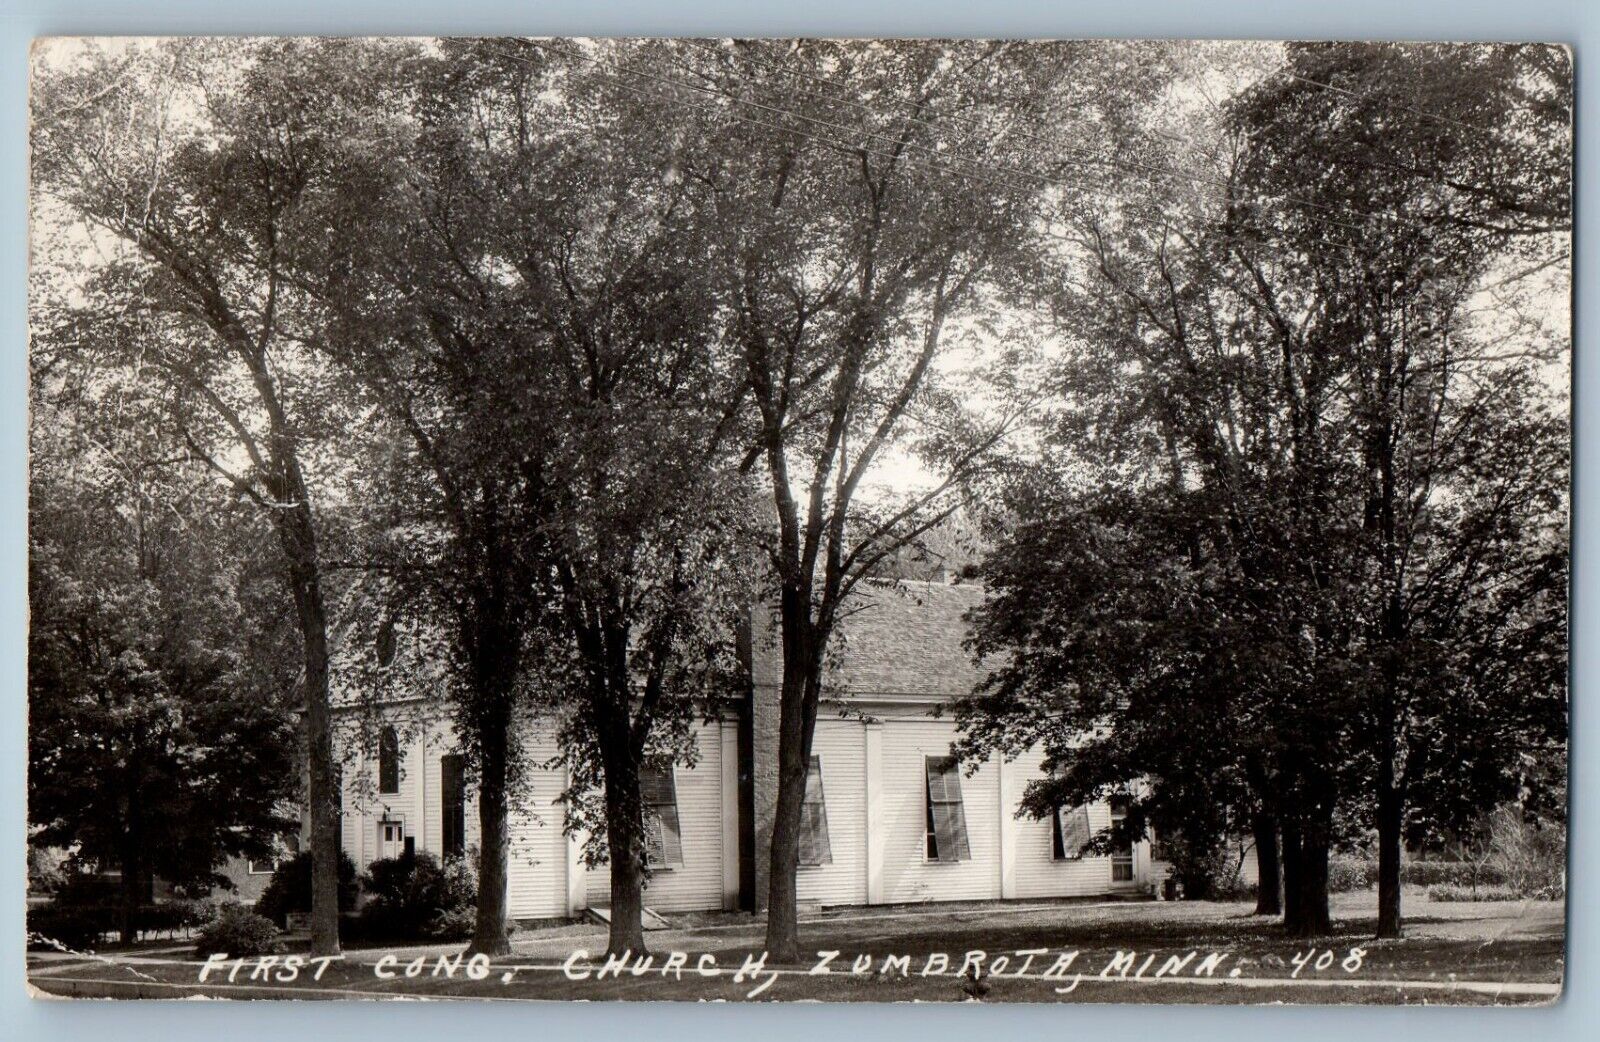 Zumbrota Minnesota MN Postcard RPPC Photo First Cong. Church c1950's Vintage